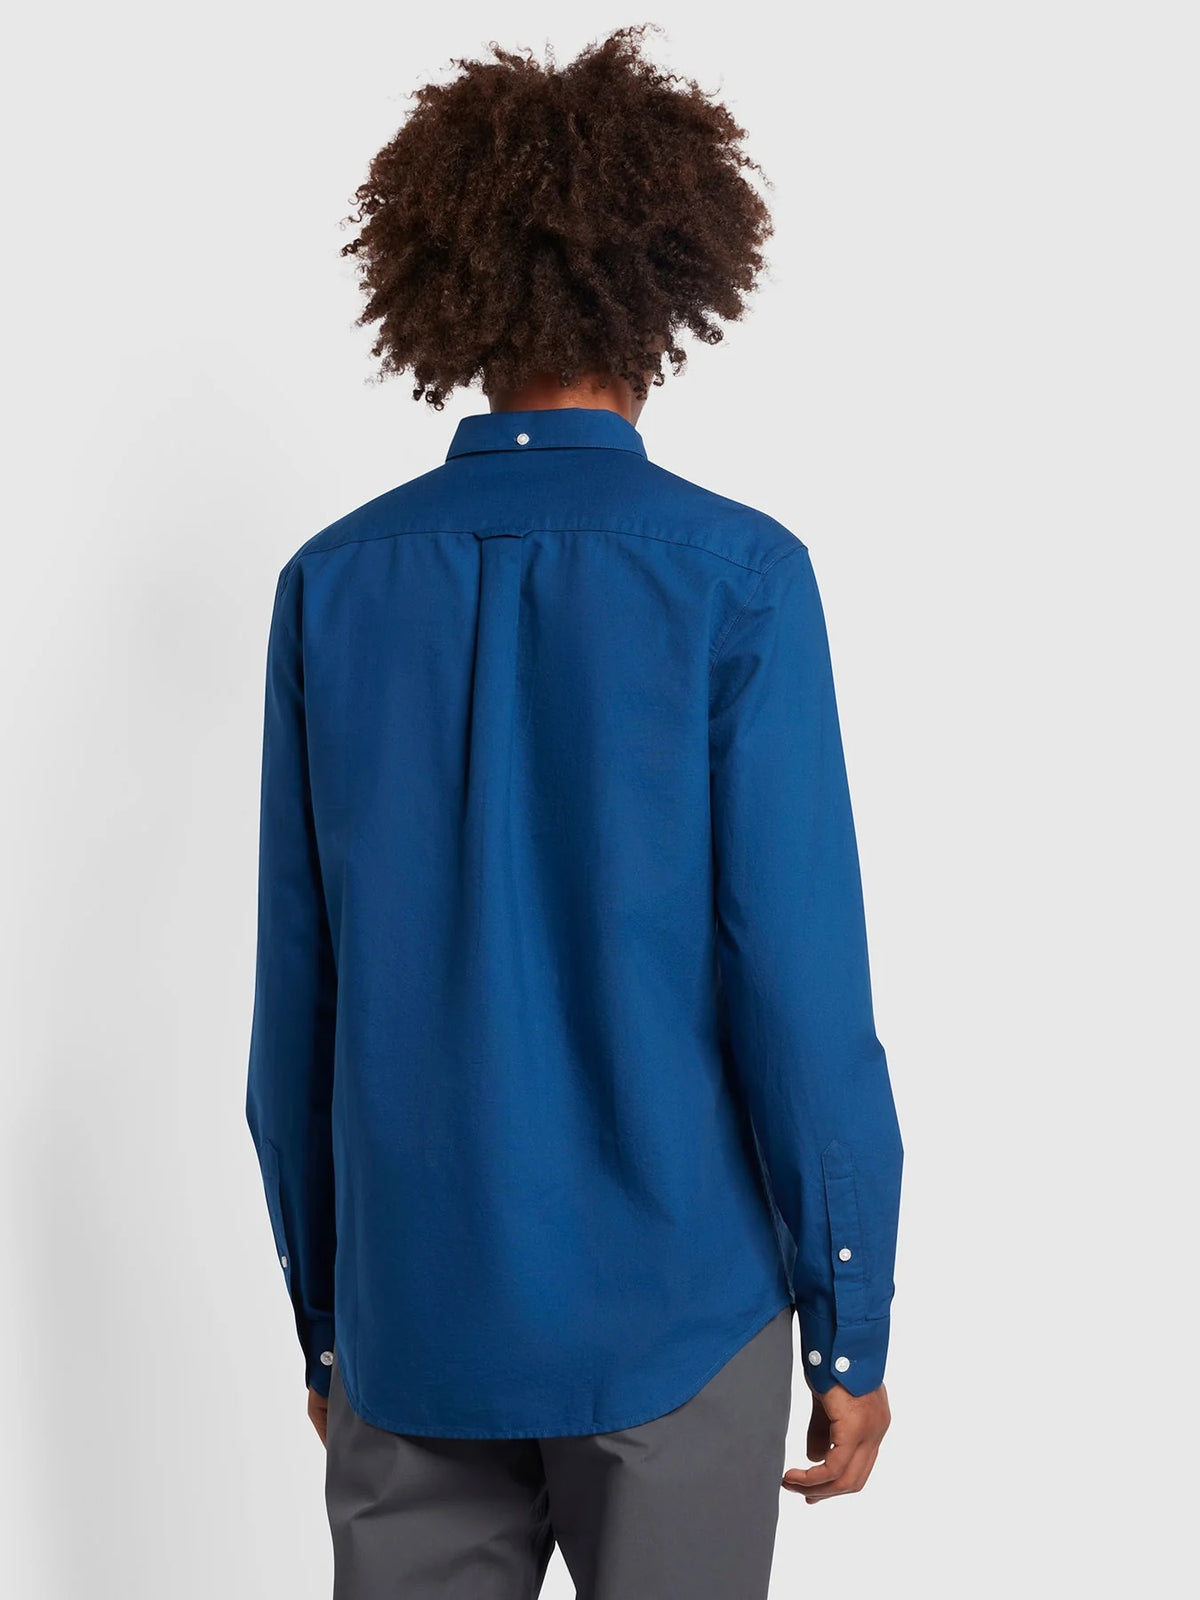 Farah Mens 'Brewer' Cotton Oxford Shirt Slim Fit, 03, F4Wsb060, Blue Peony